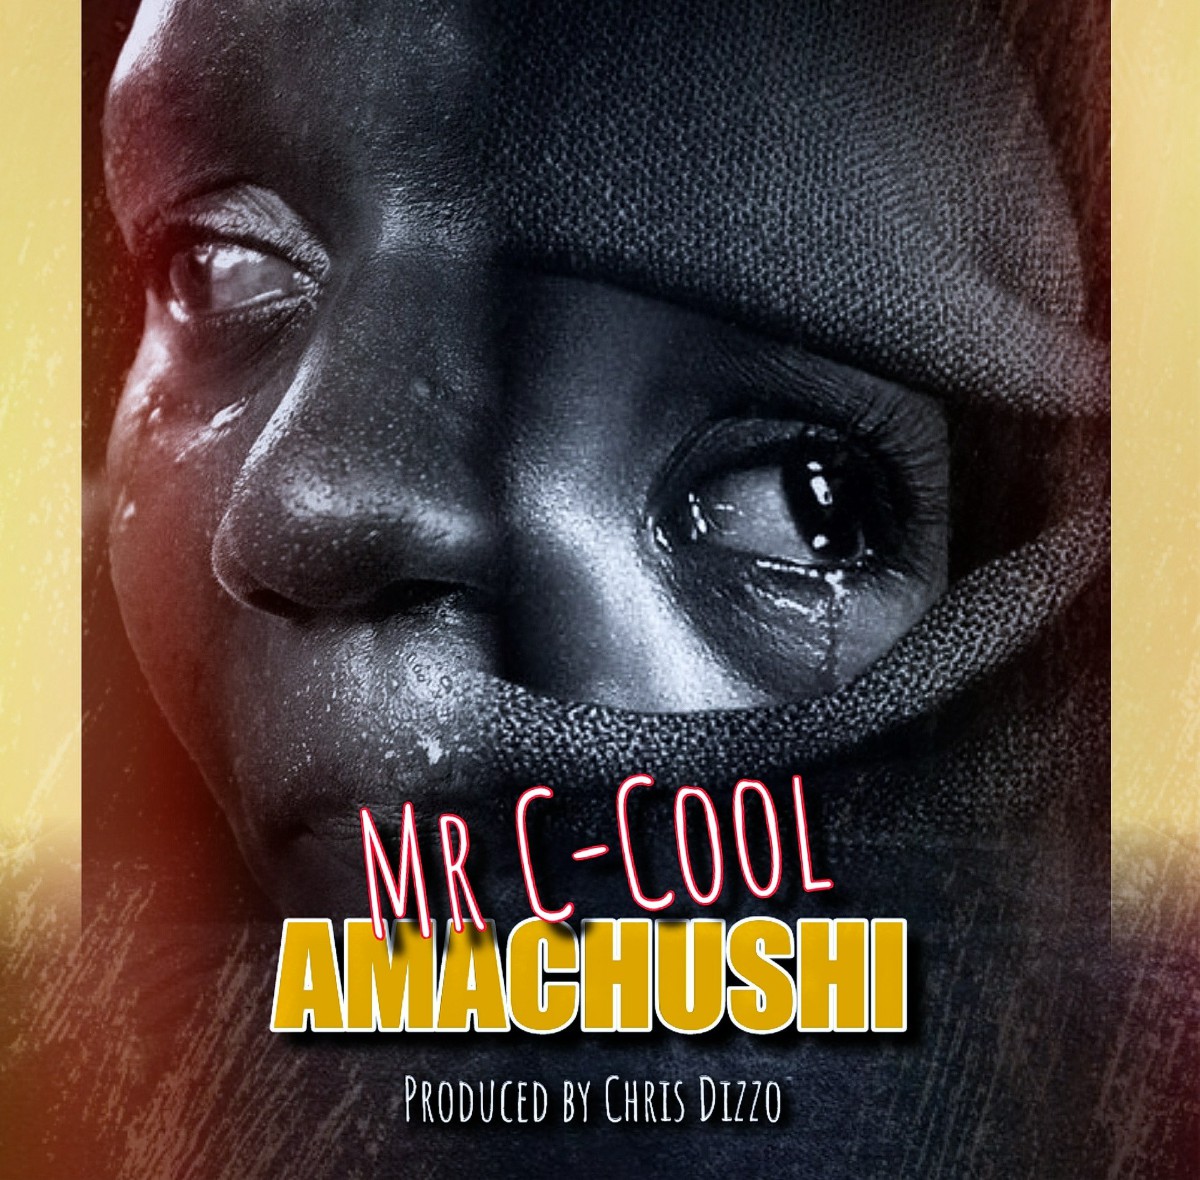 Mr C-Cool - Amachushi (Prod. Chris Dizzo)